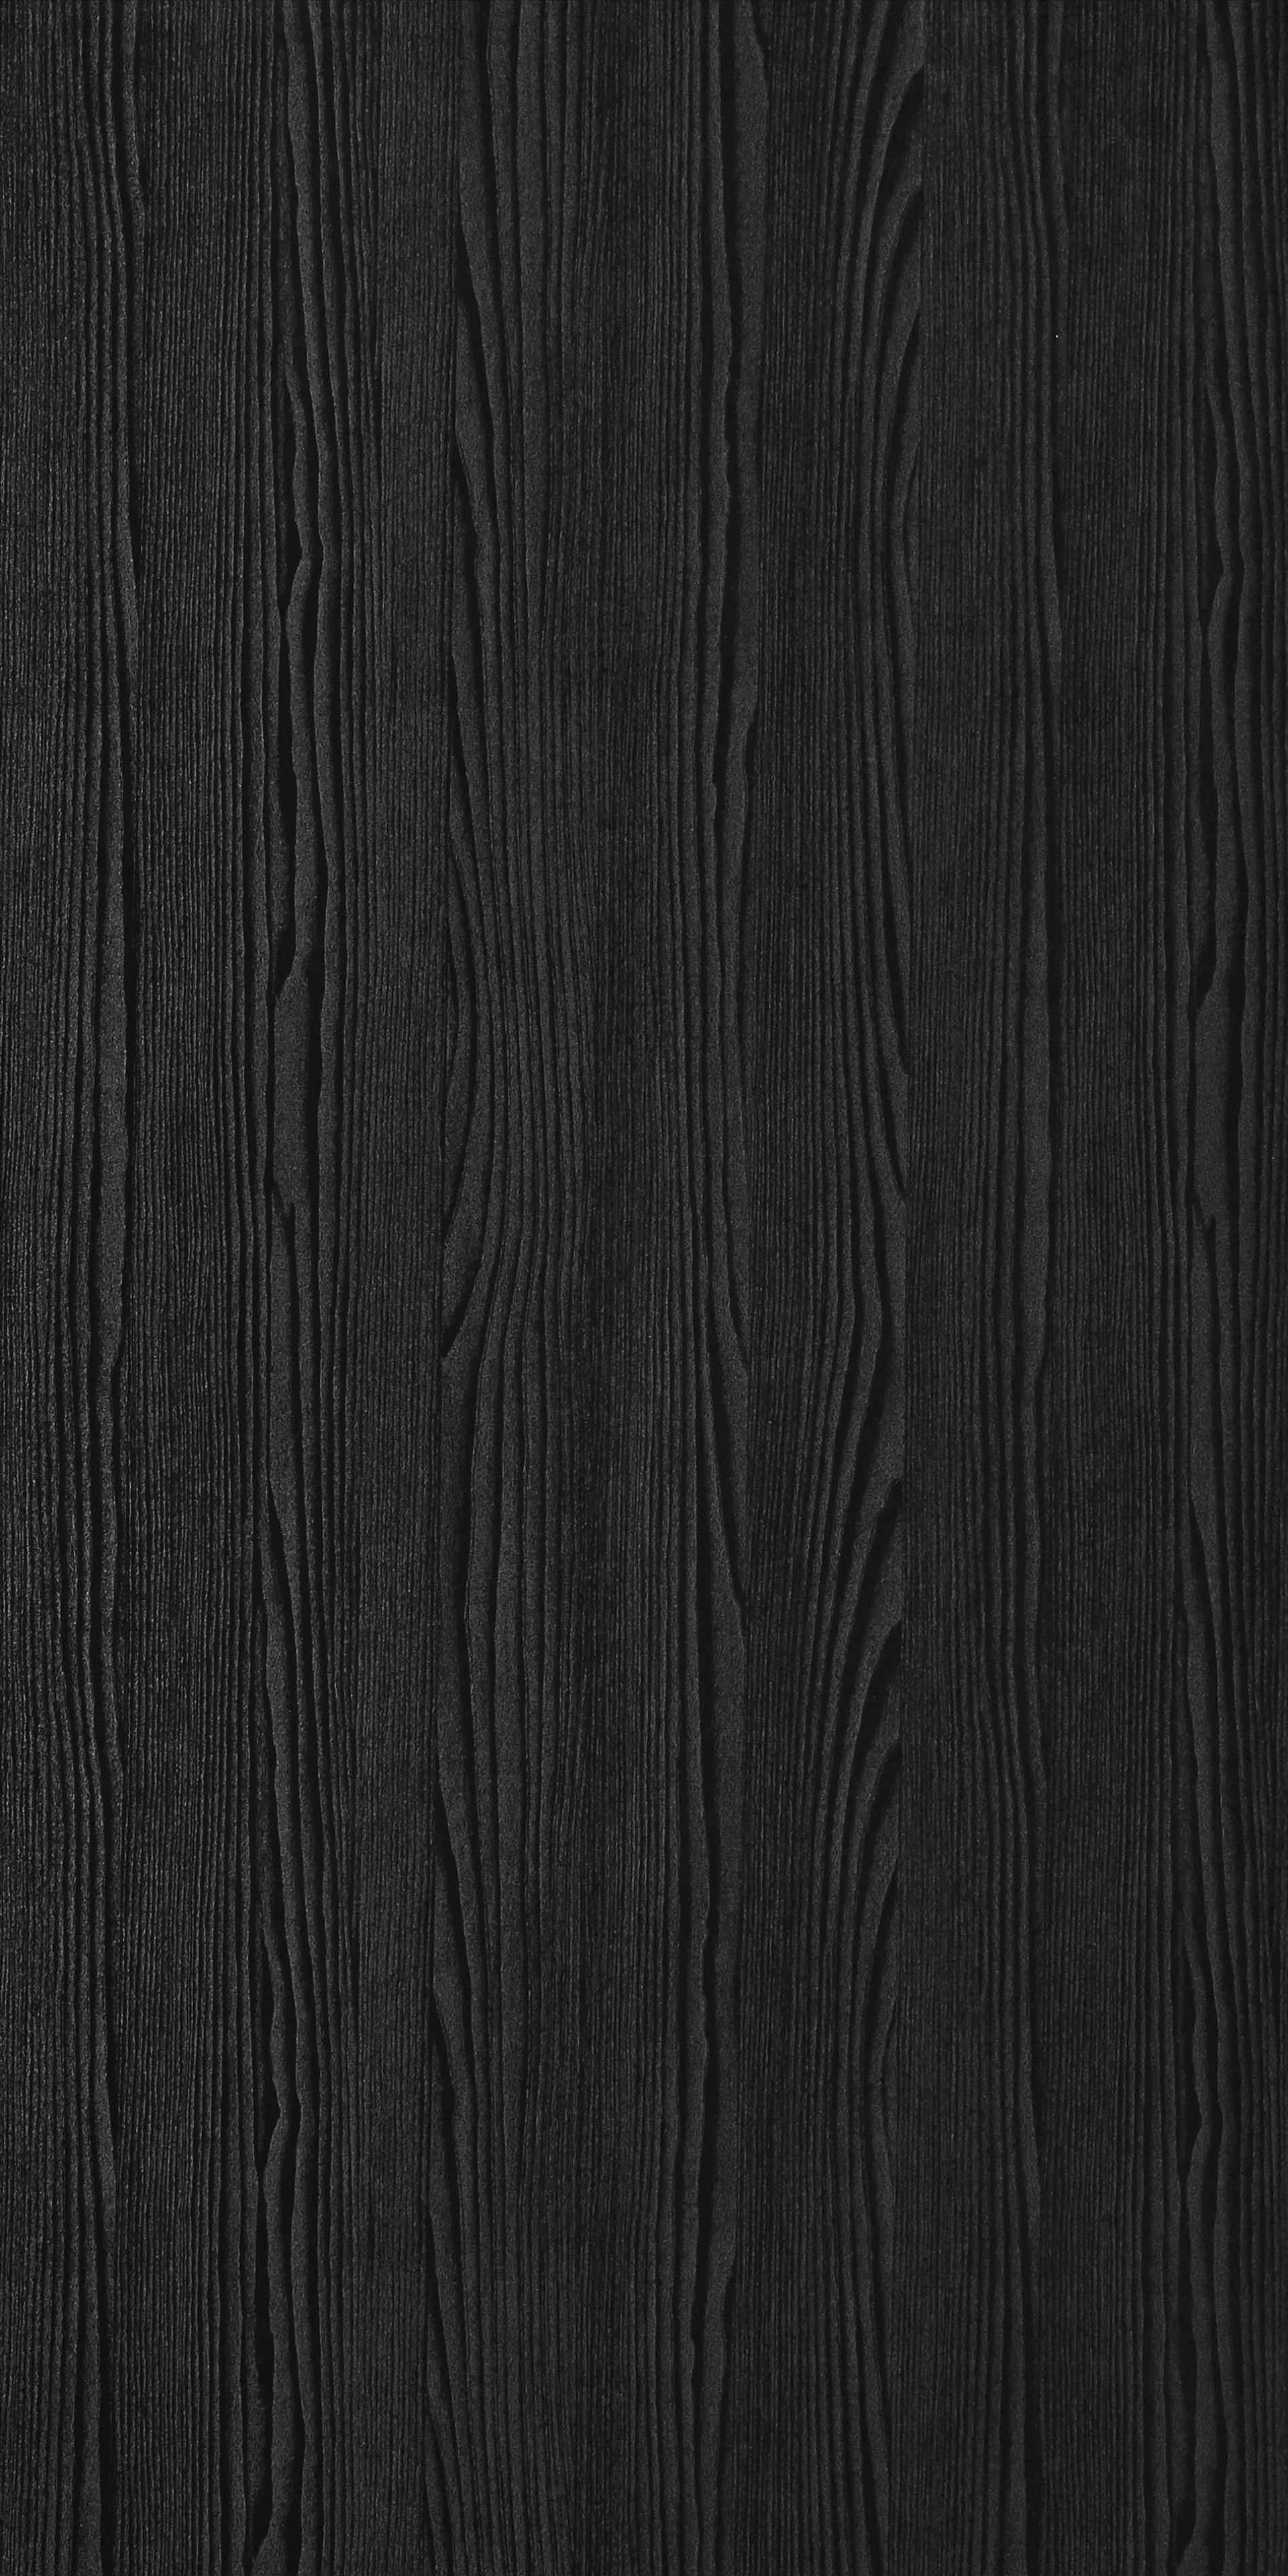 AMOLED Texture Wallpaper. Black wood texture, Wood texture